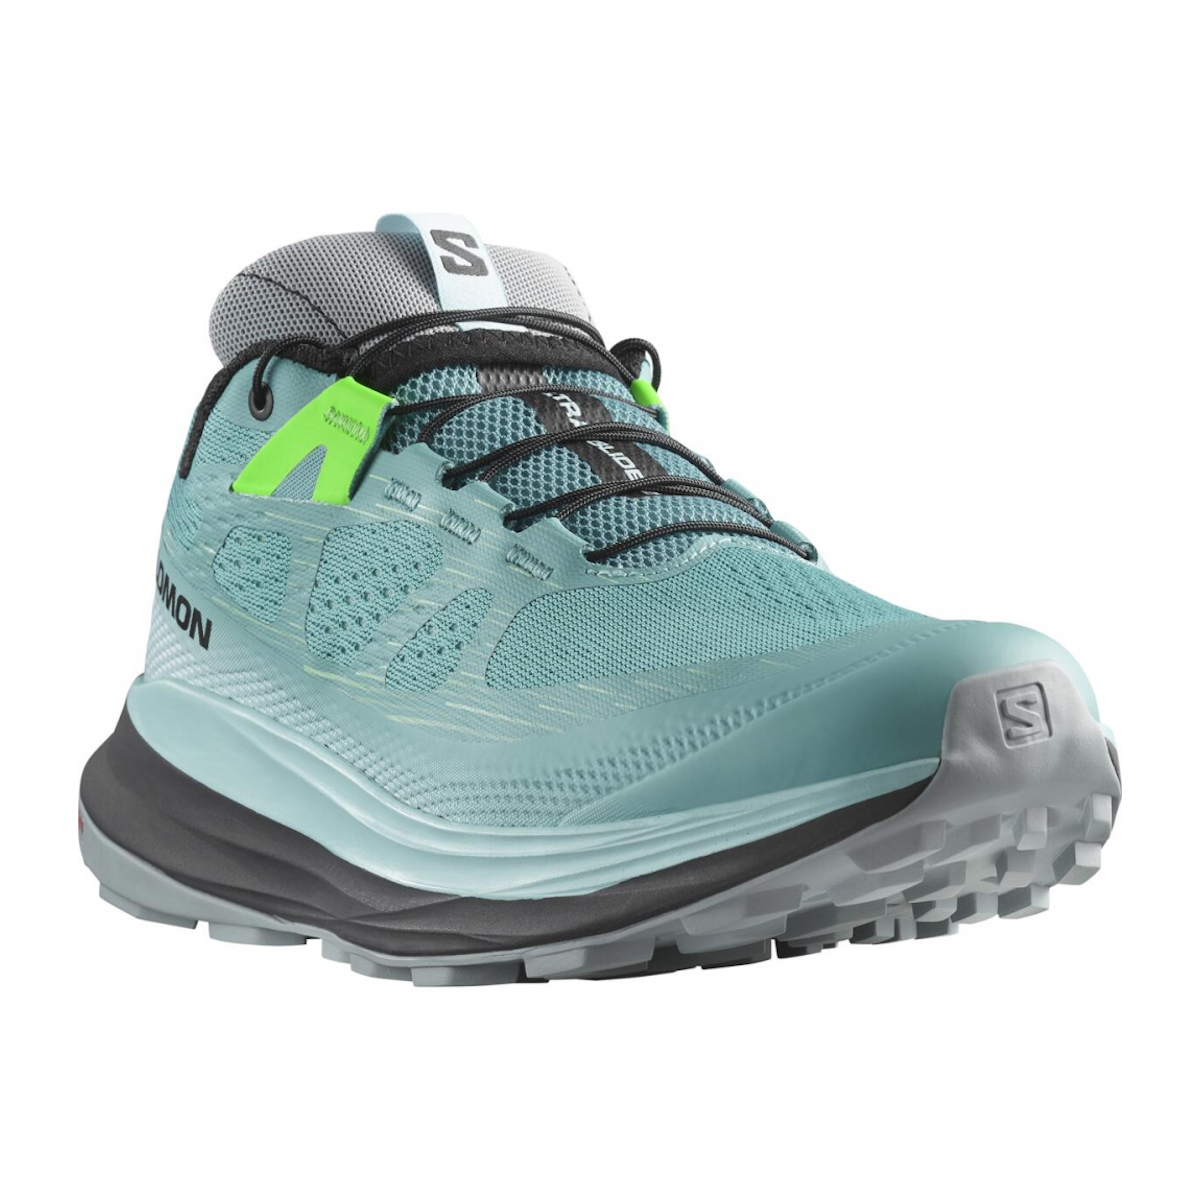 SALOMON ULTRA GLIDE 2 W trail running shoes - light blue/black/green